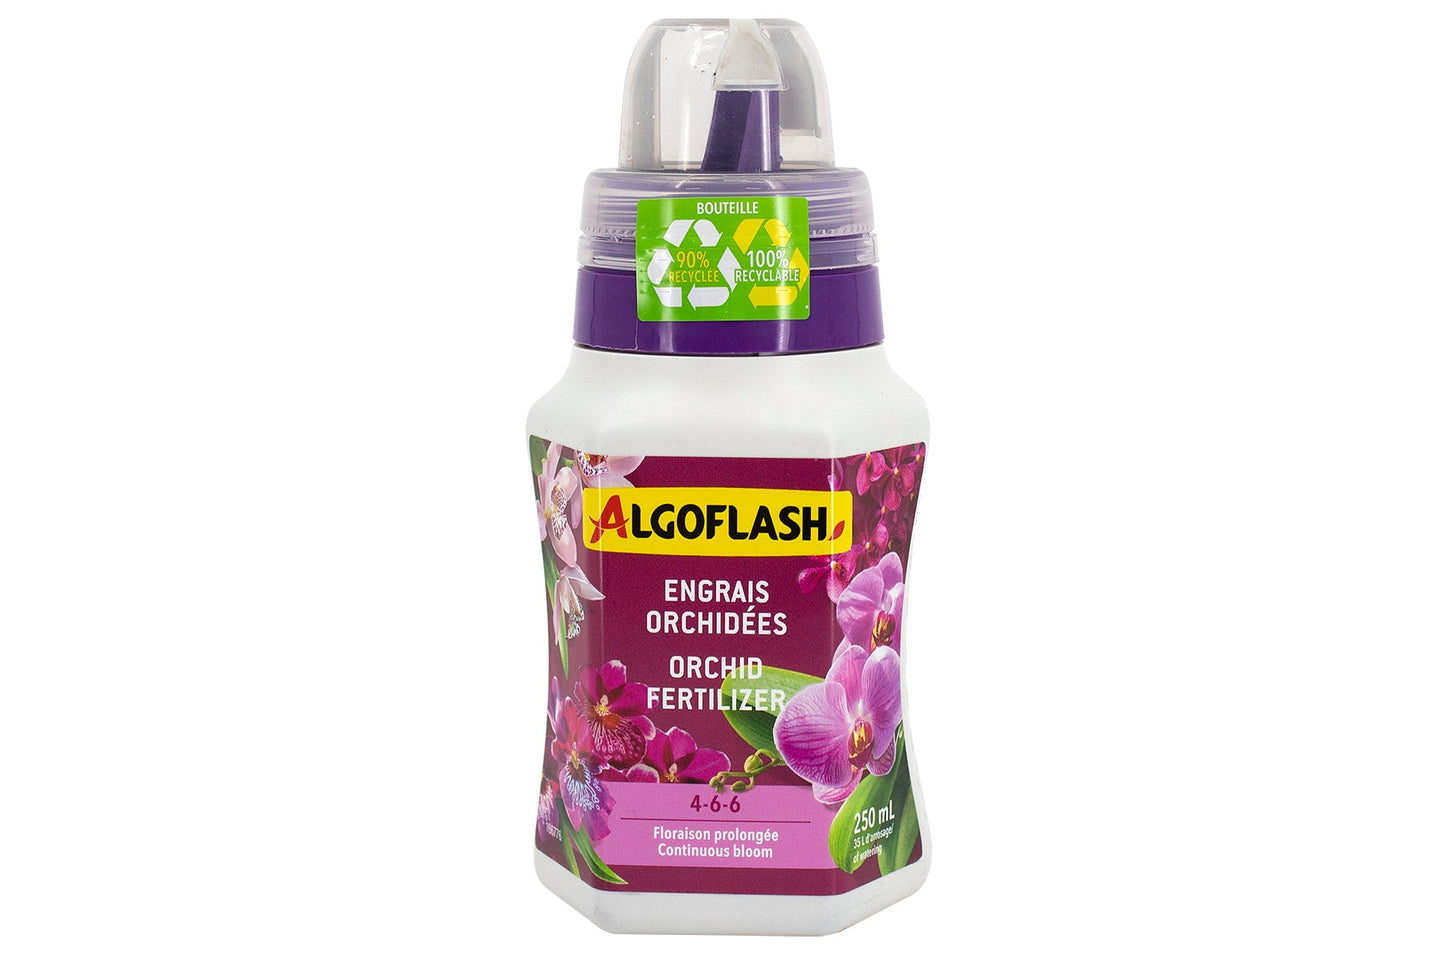 Algoflash liquid fertilizer for orchids 4-6-6 with trace elements